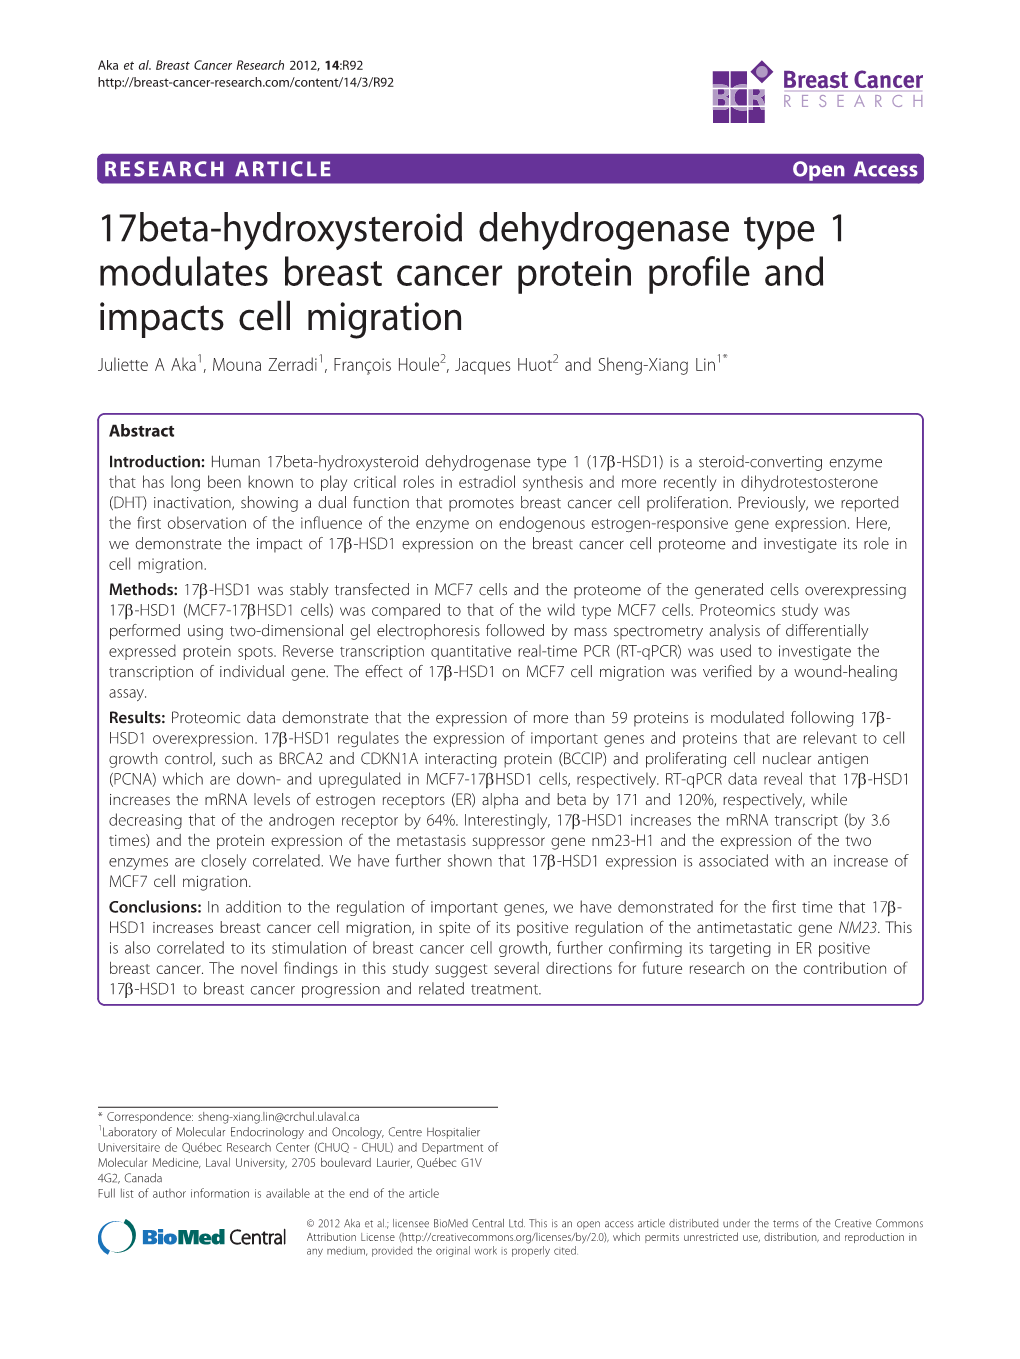 17Beta-Hydroxysteroid Dehydrogenase Type 1 Modulates